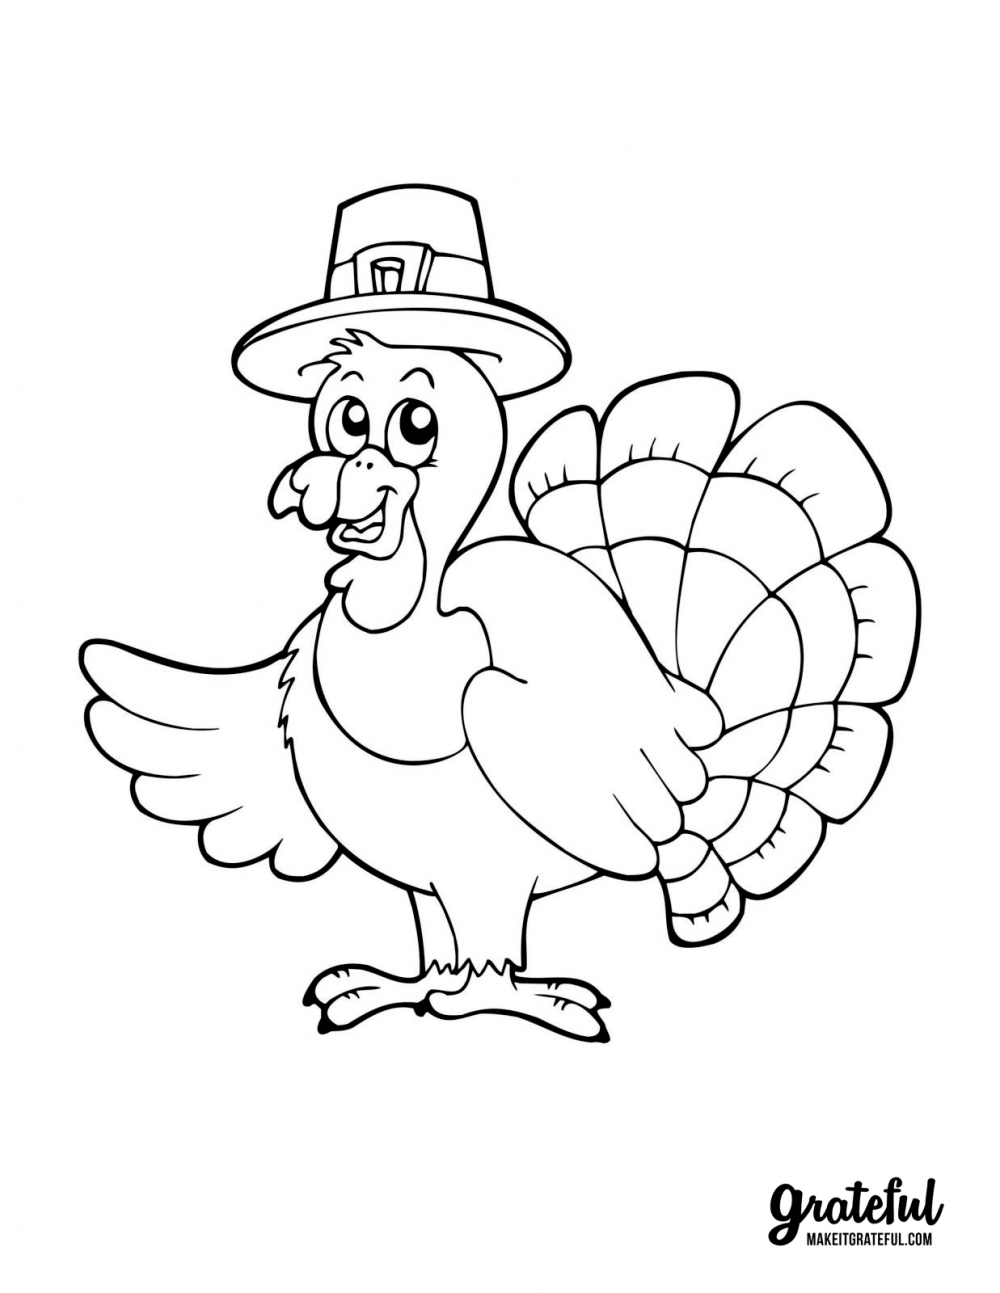 Pilgrim turkey - Thanksgiving coloring pages